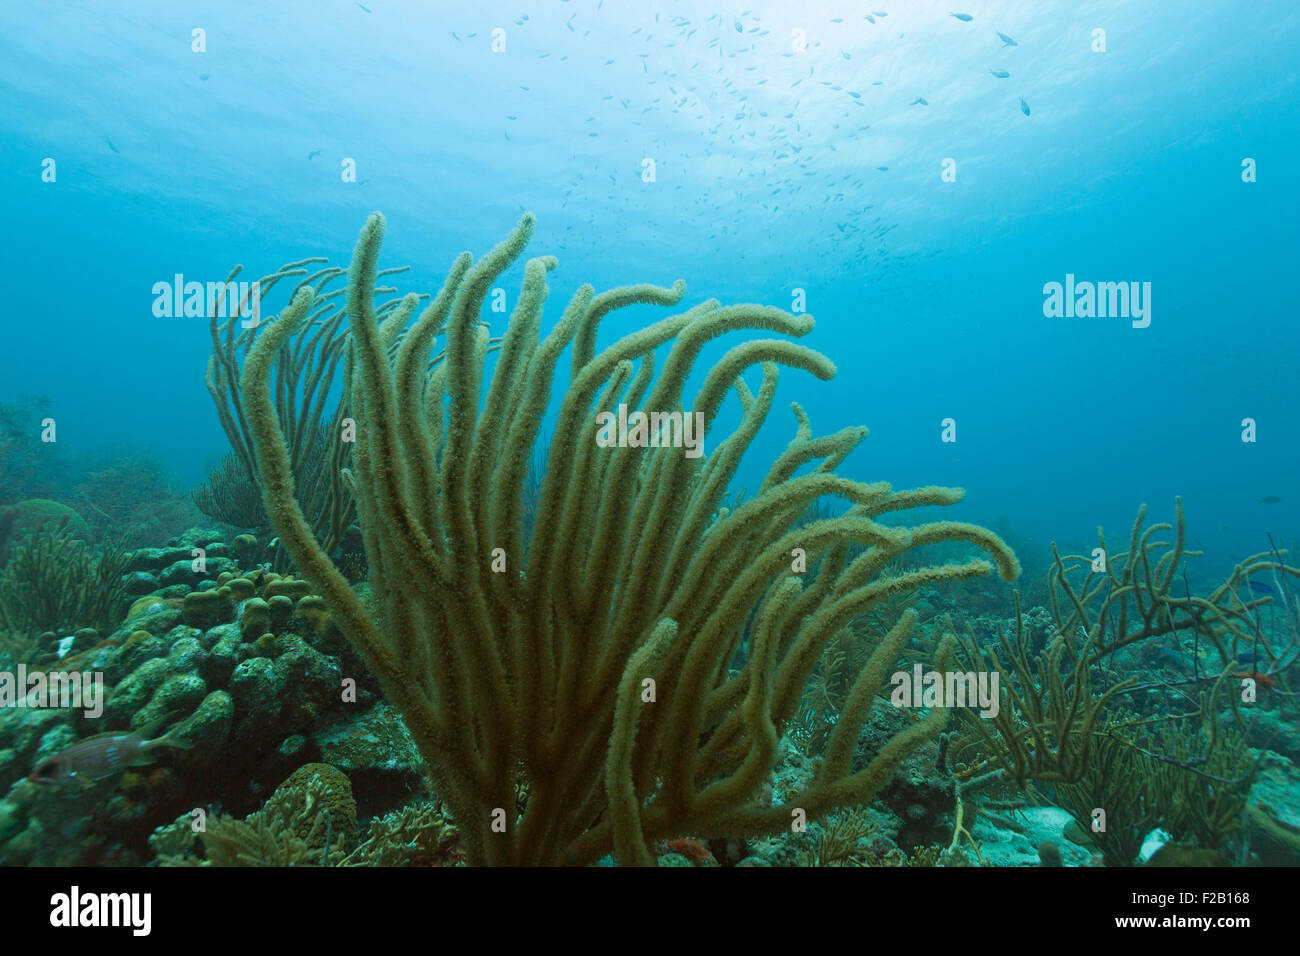 Giganti di Mare (asta Plexaurella nutans) nel mar dei Caraibi. Foto V.D. Foto Stock